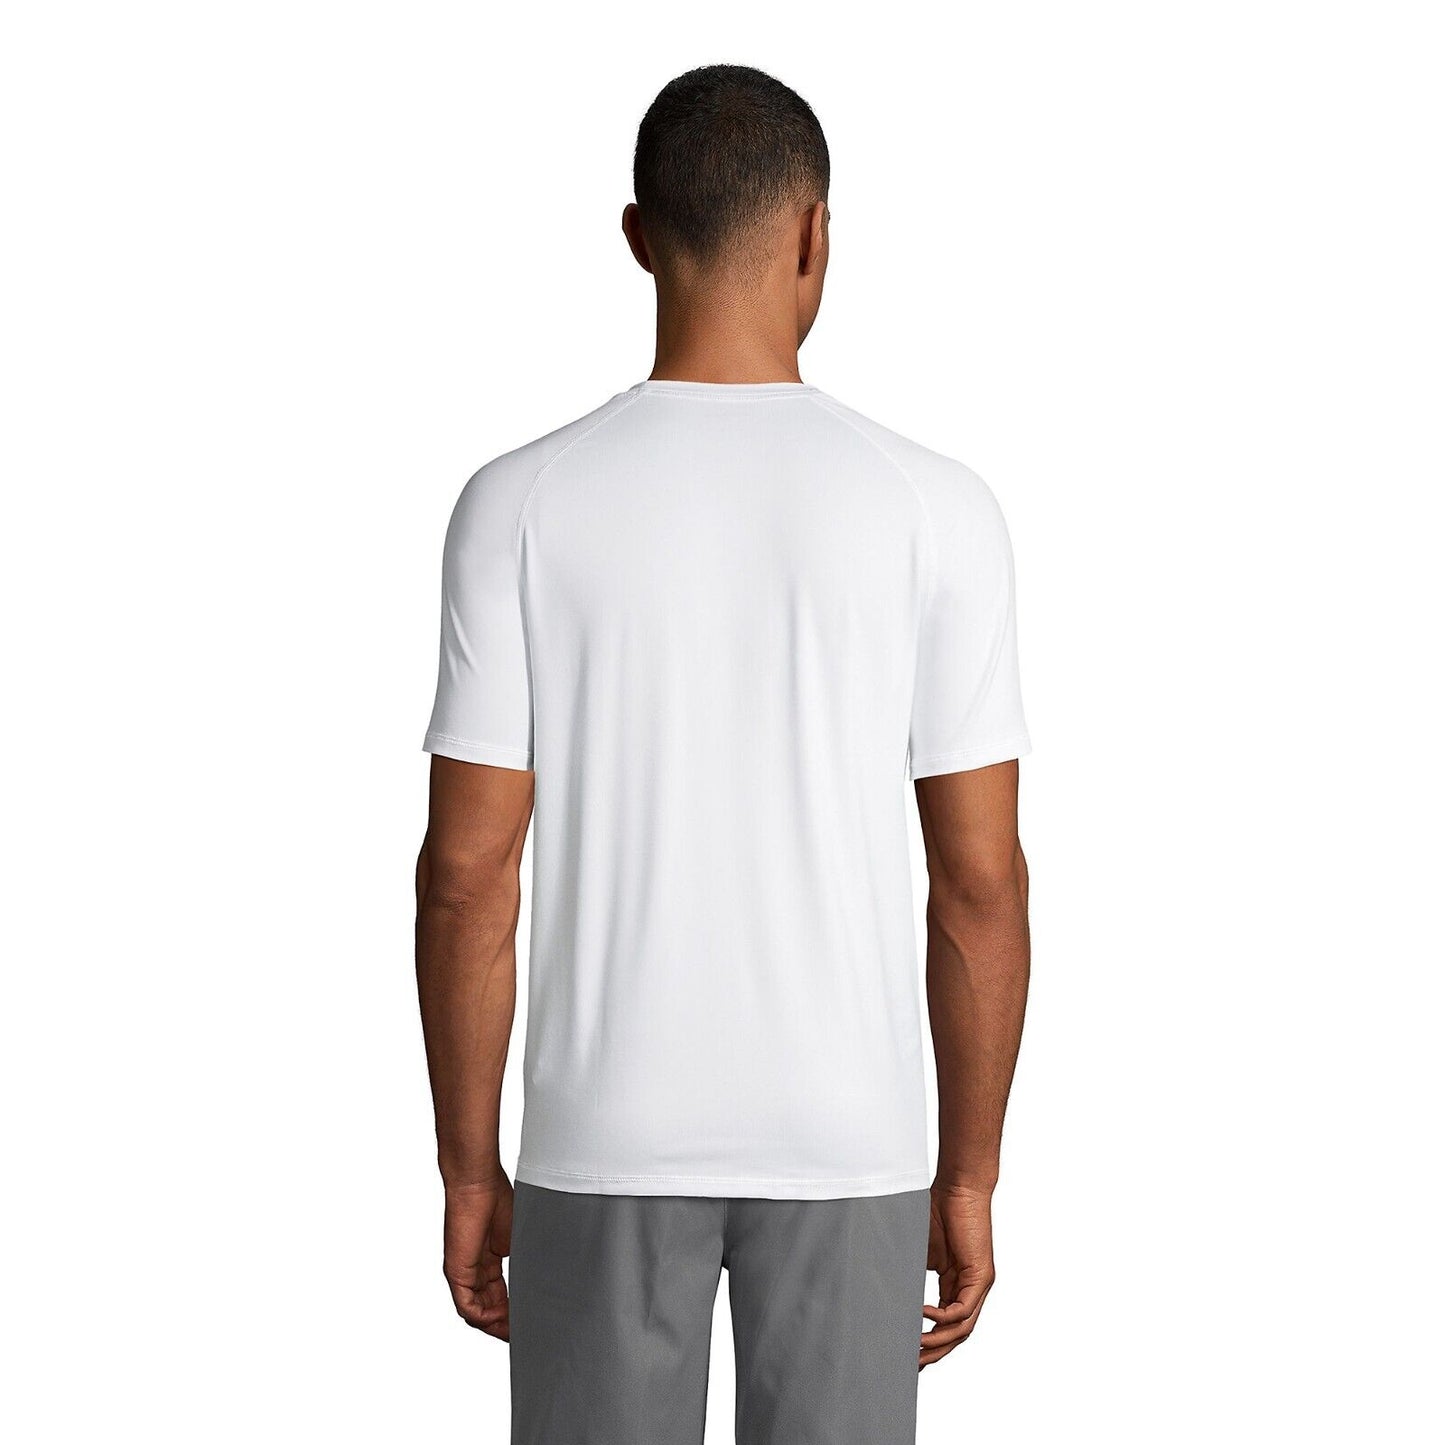 Men's Short Sleeve Active Gym T-shirt Size S